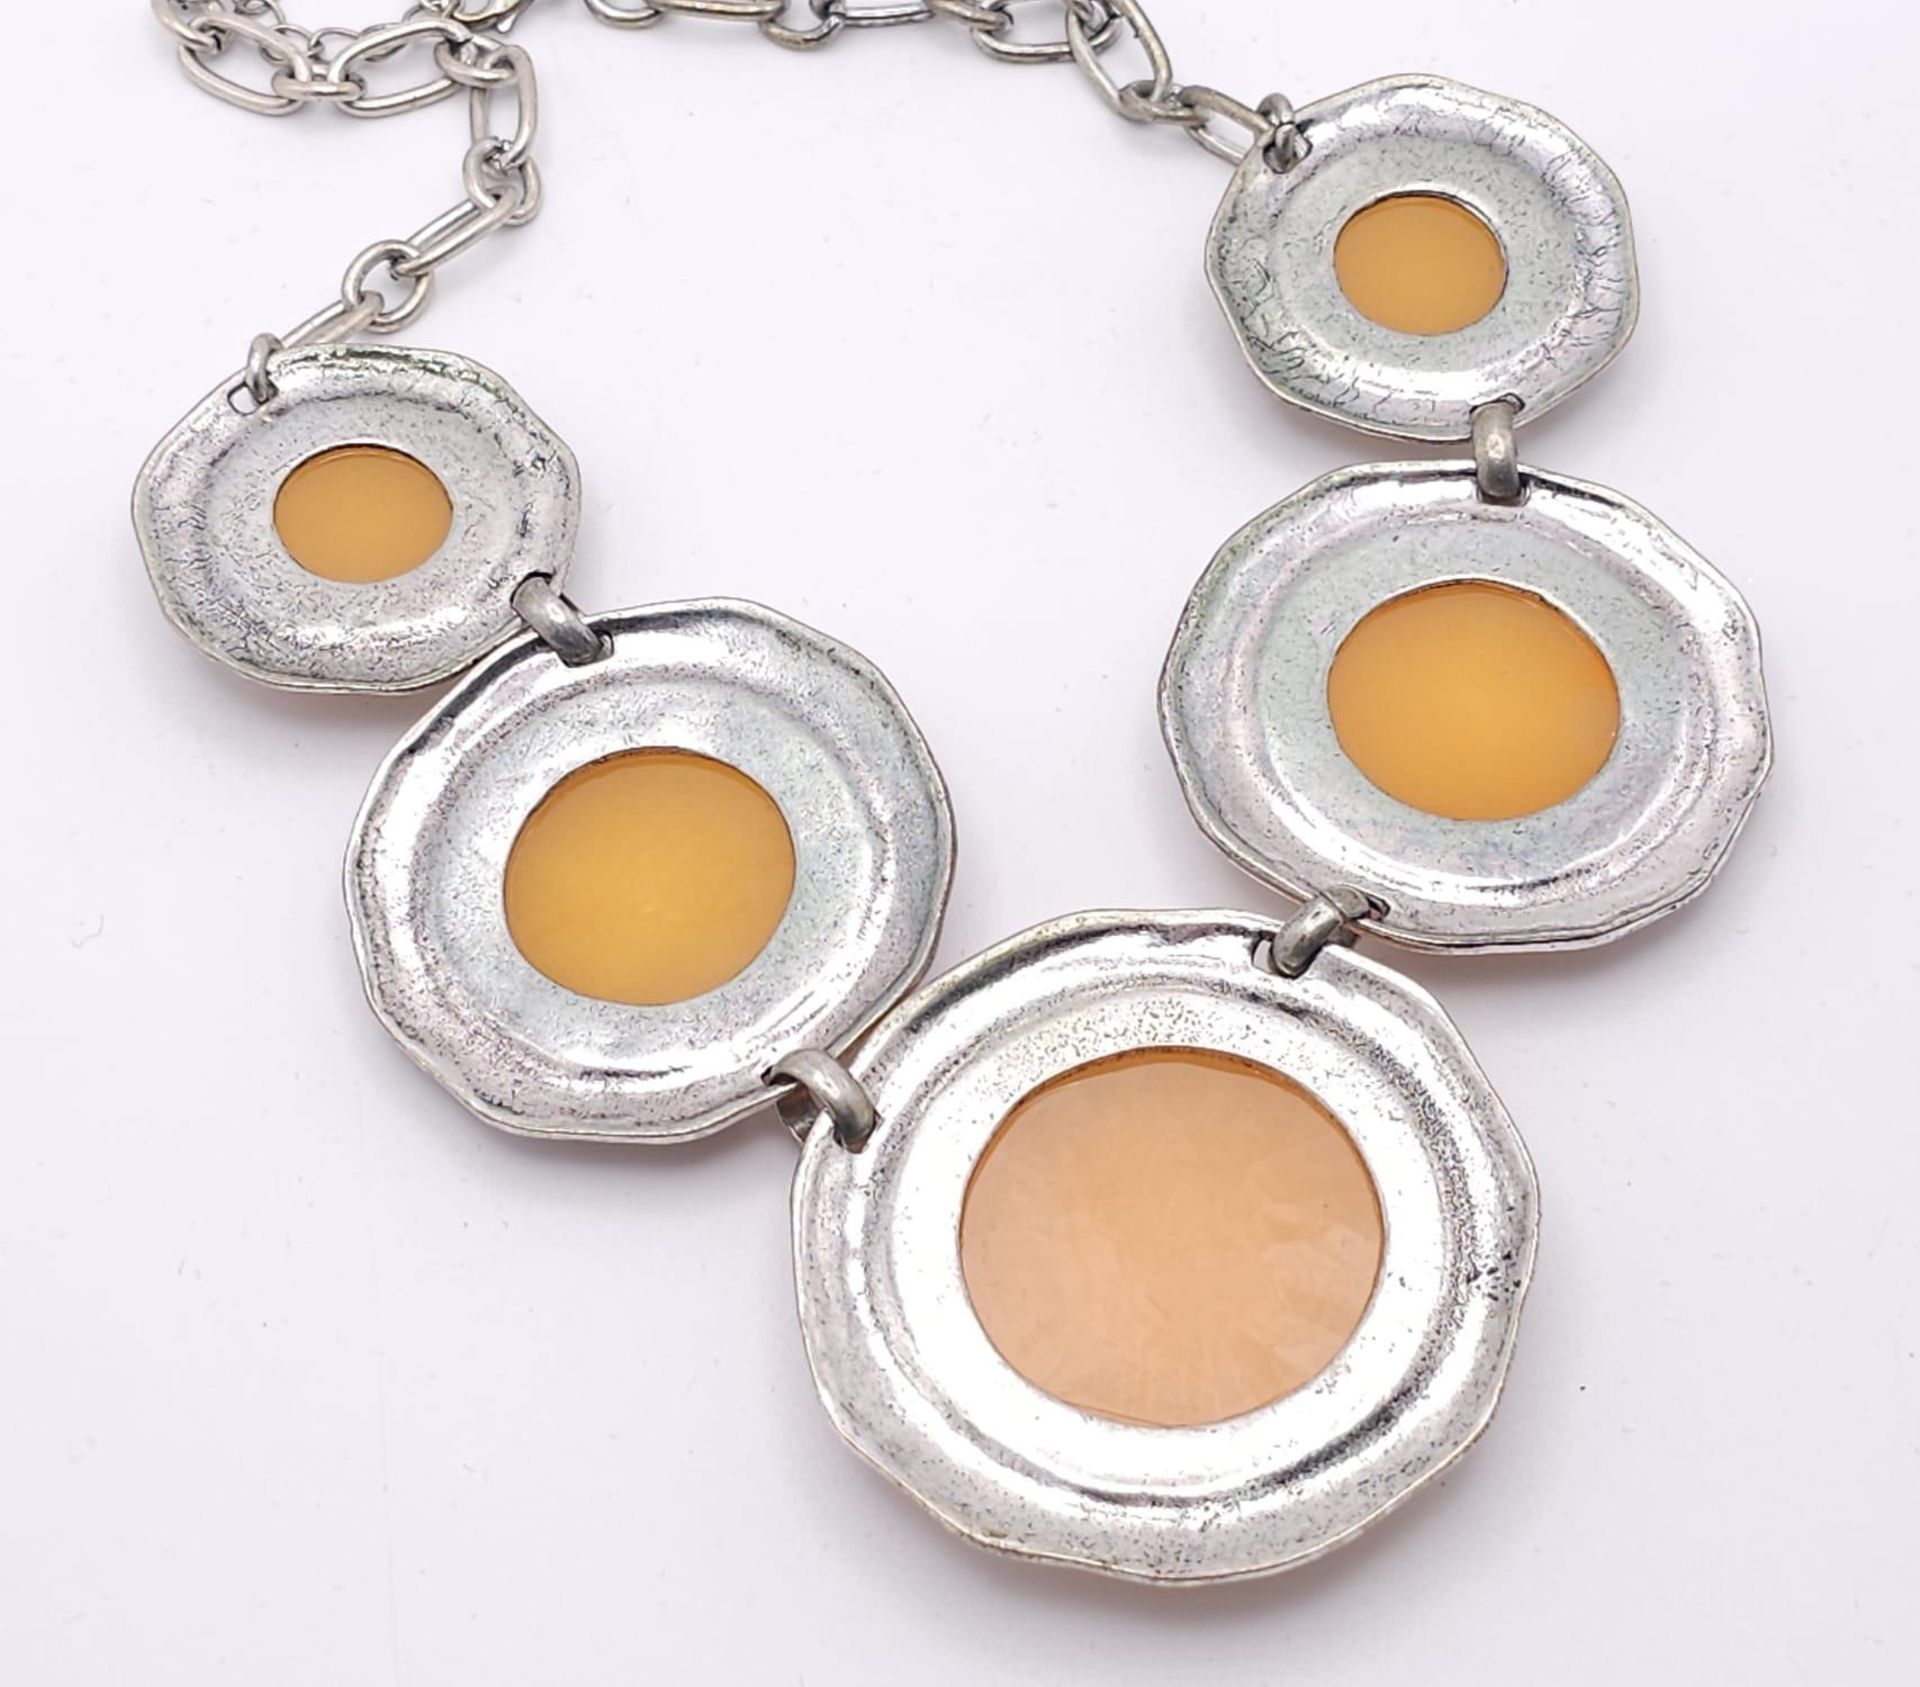 An Egg Yolk Amber Resin Necklace and Earrings Set. 46cm necklace. earrings - 5cm. - Bild 6 aus 13